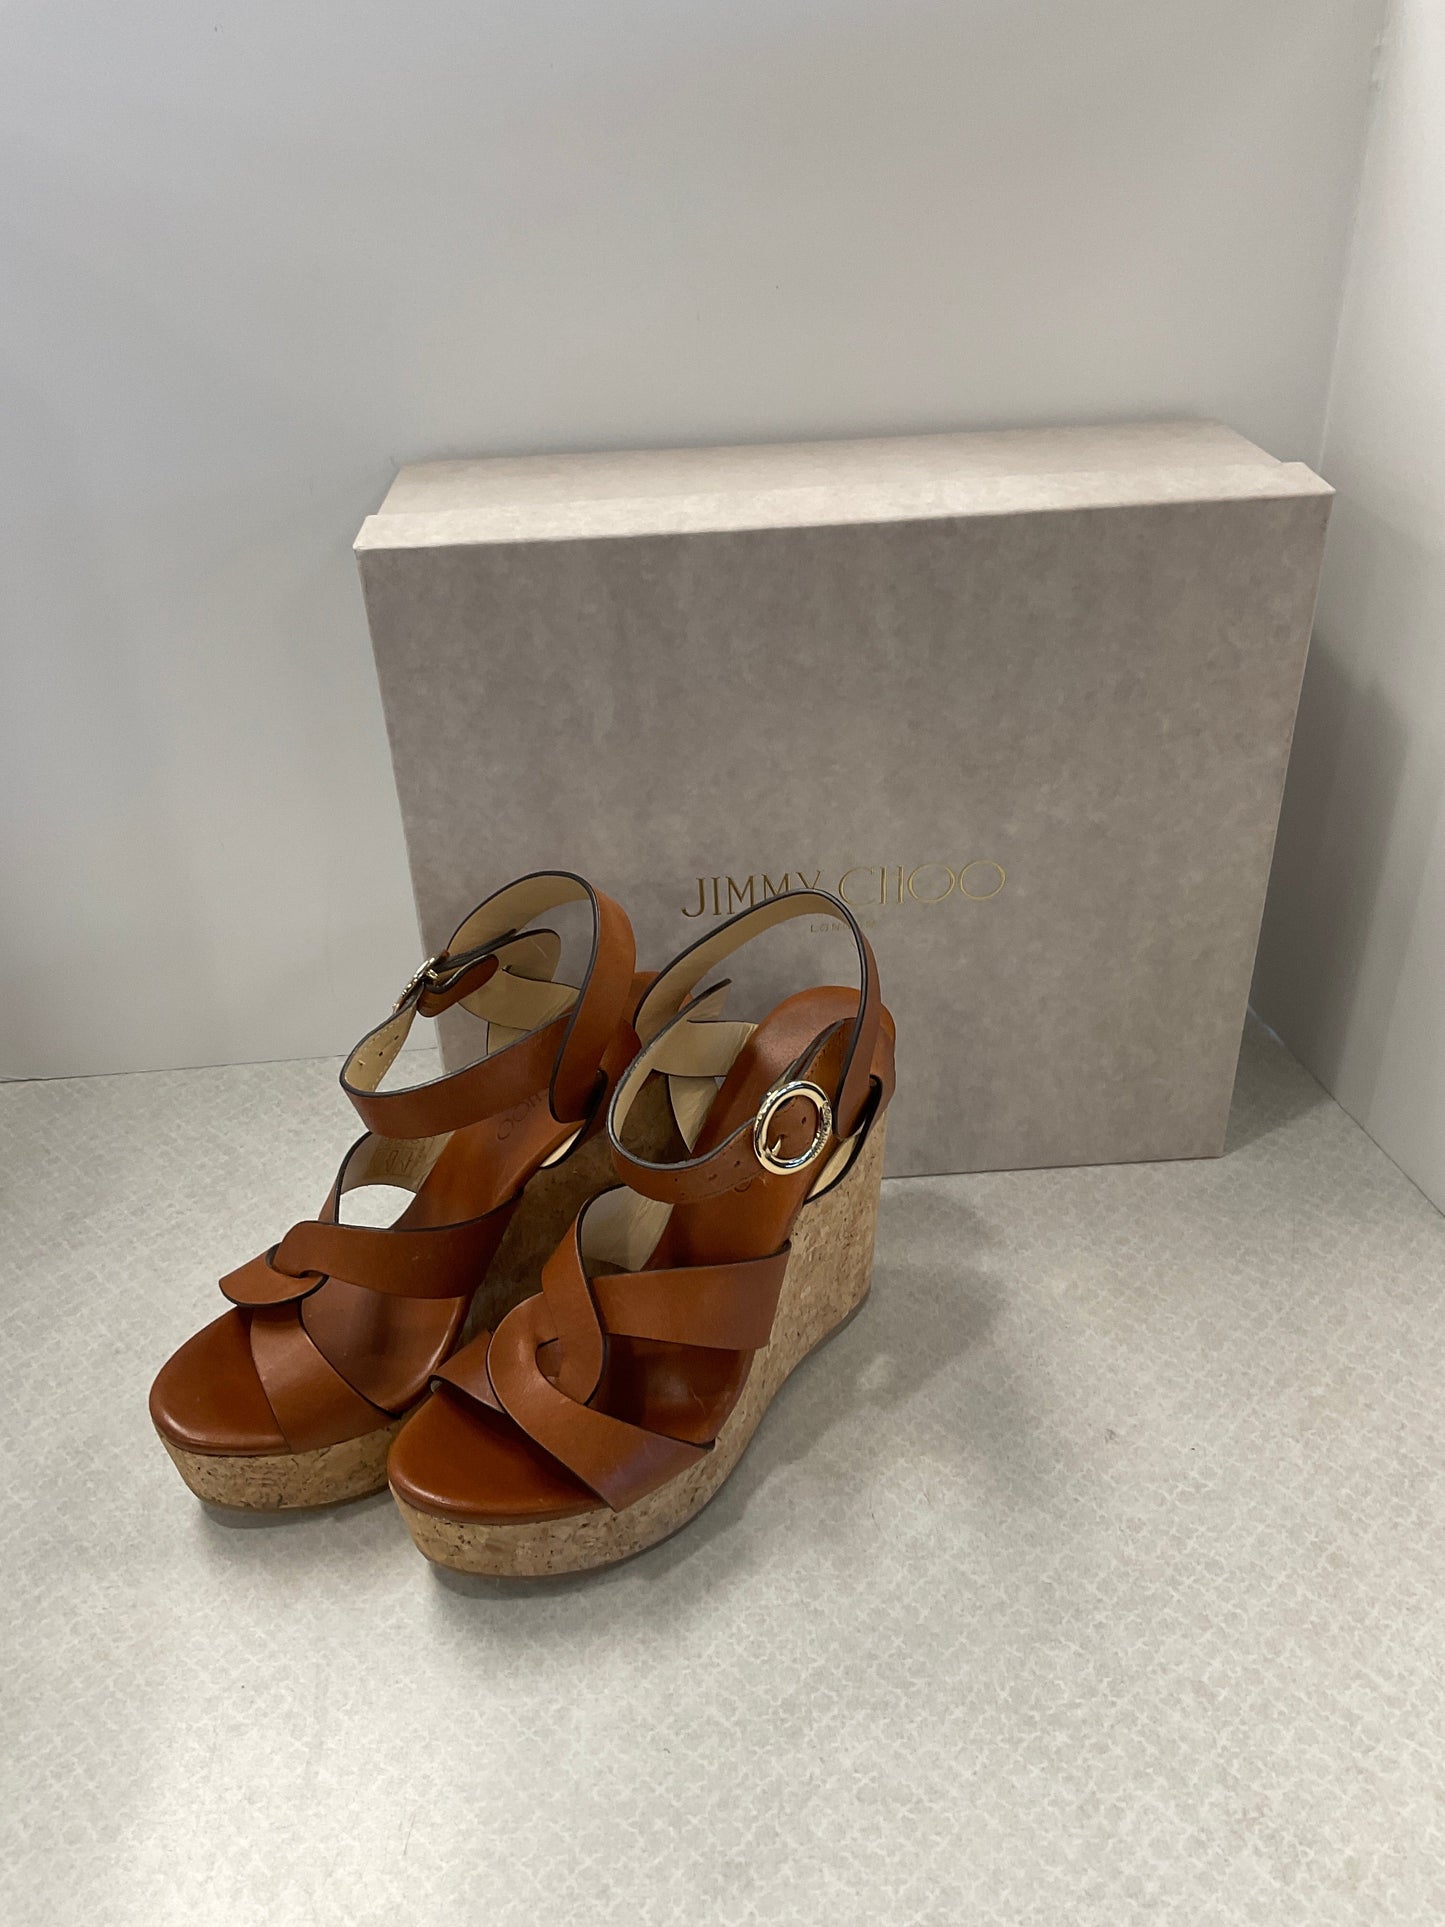 Brown Sandals Luxury Designer Jimmy Choo, Size 8